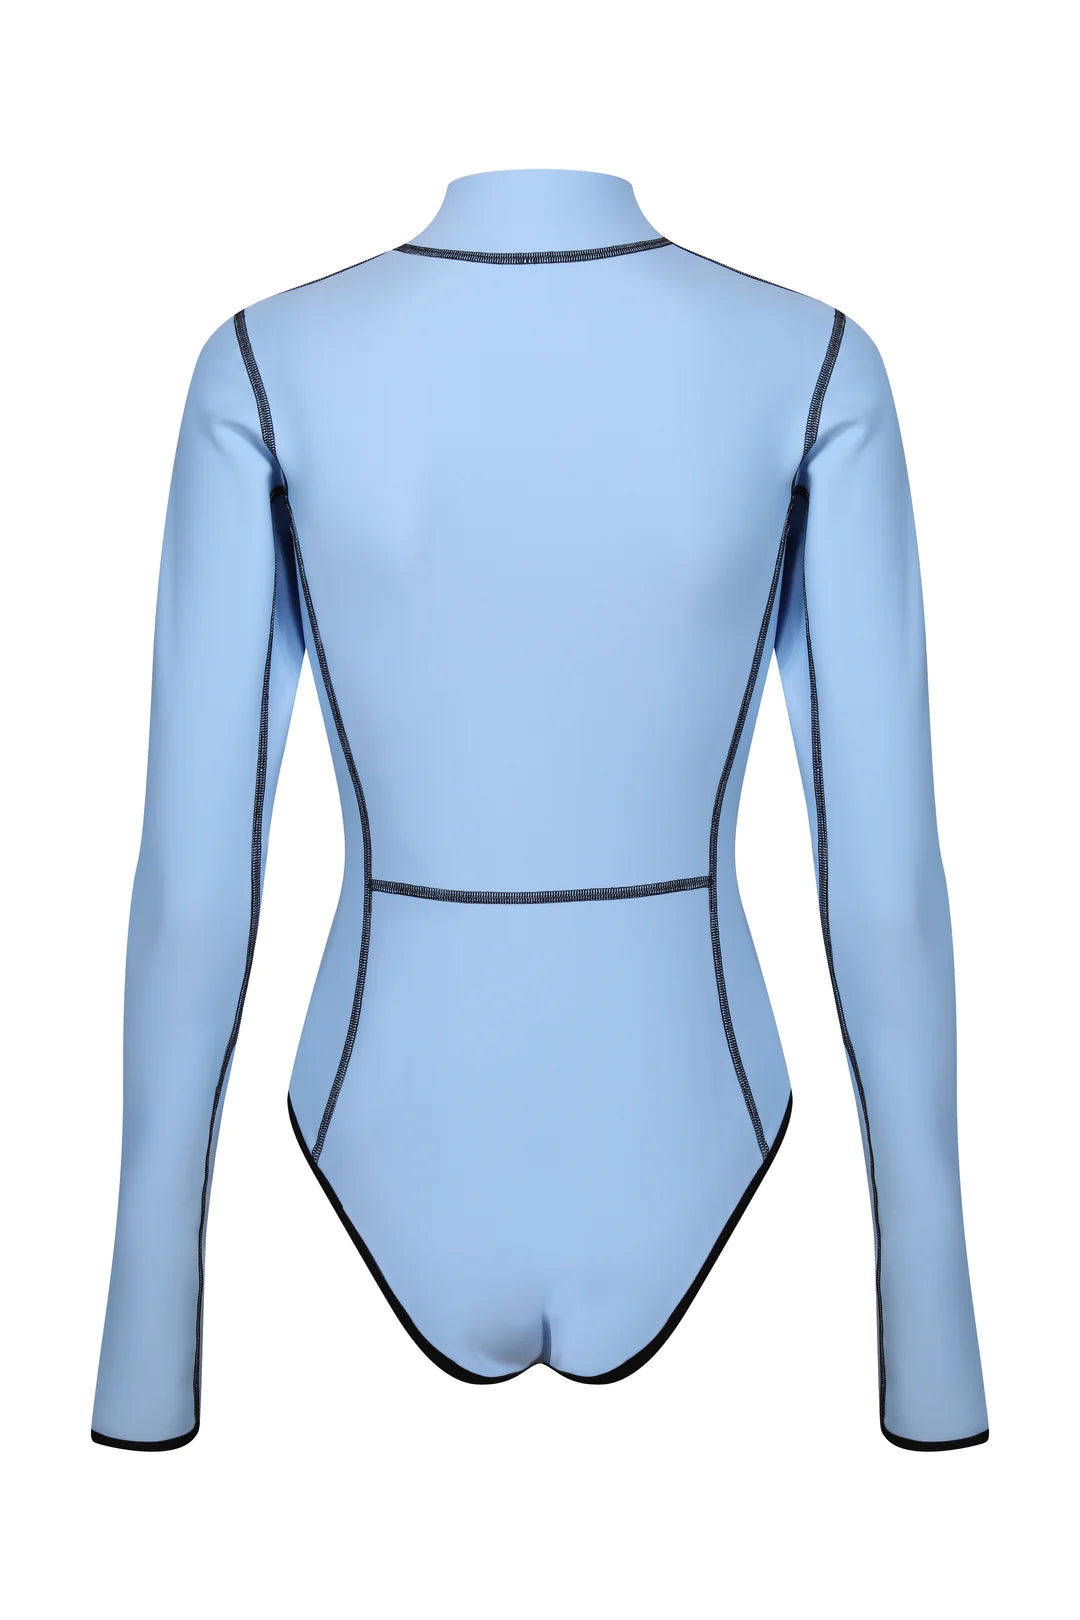 Davy J - The Bonded Long Sleeve Swimsuit - Powder Blue/Black